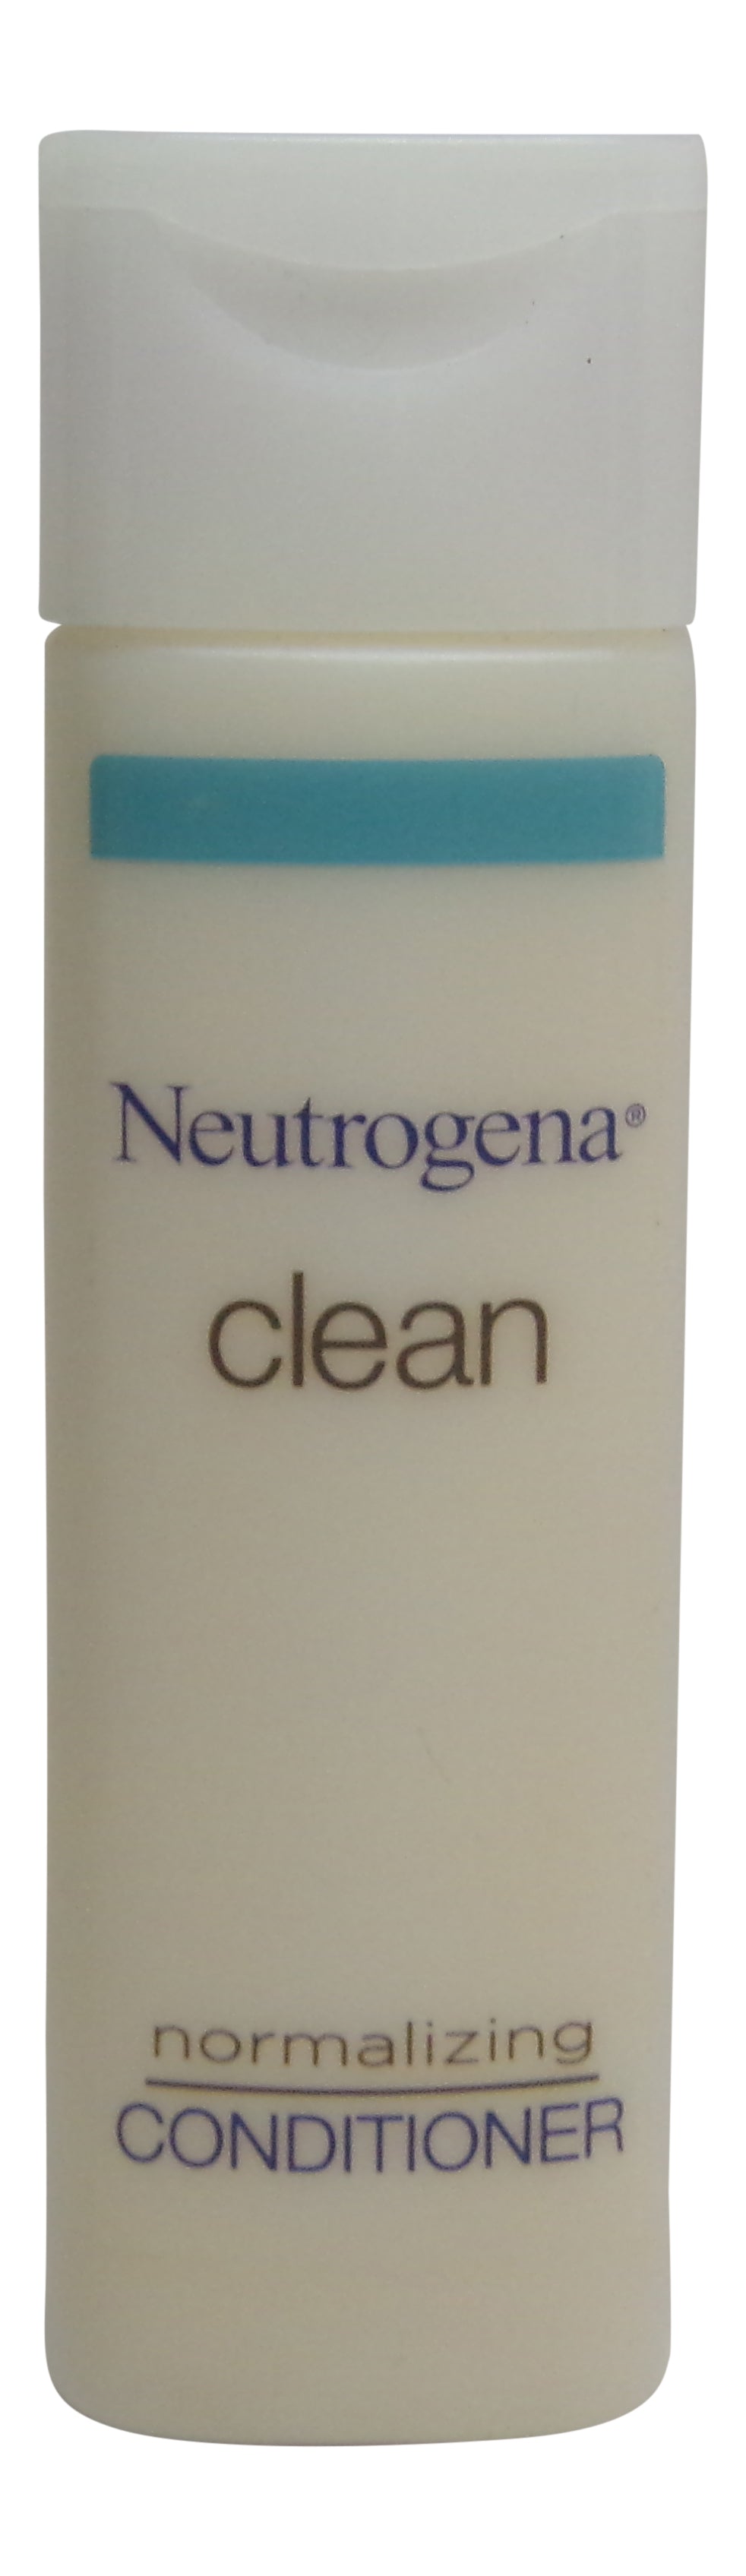 Neutrogena Travel Set 2 of each Shampoo, Conditioner, Lotion, Soap